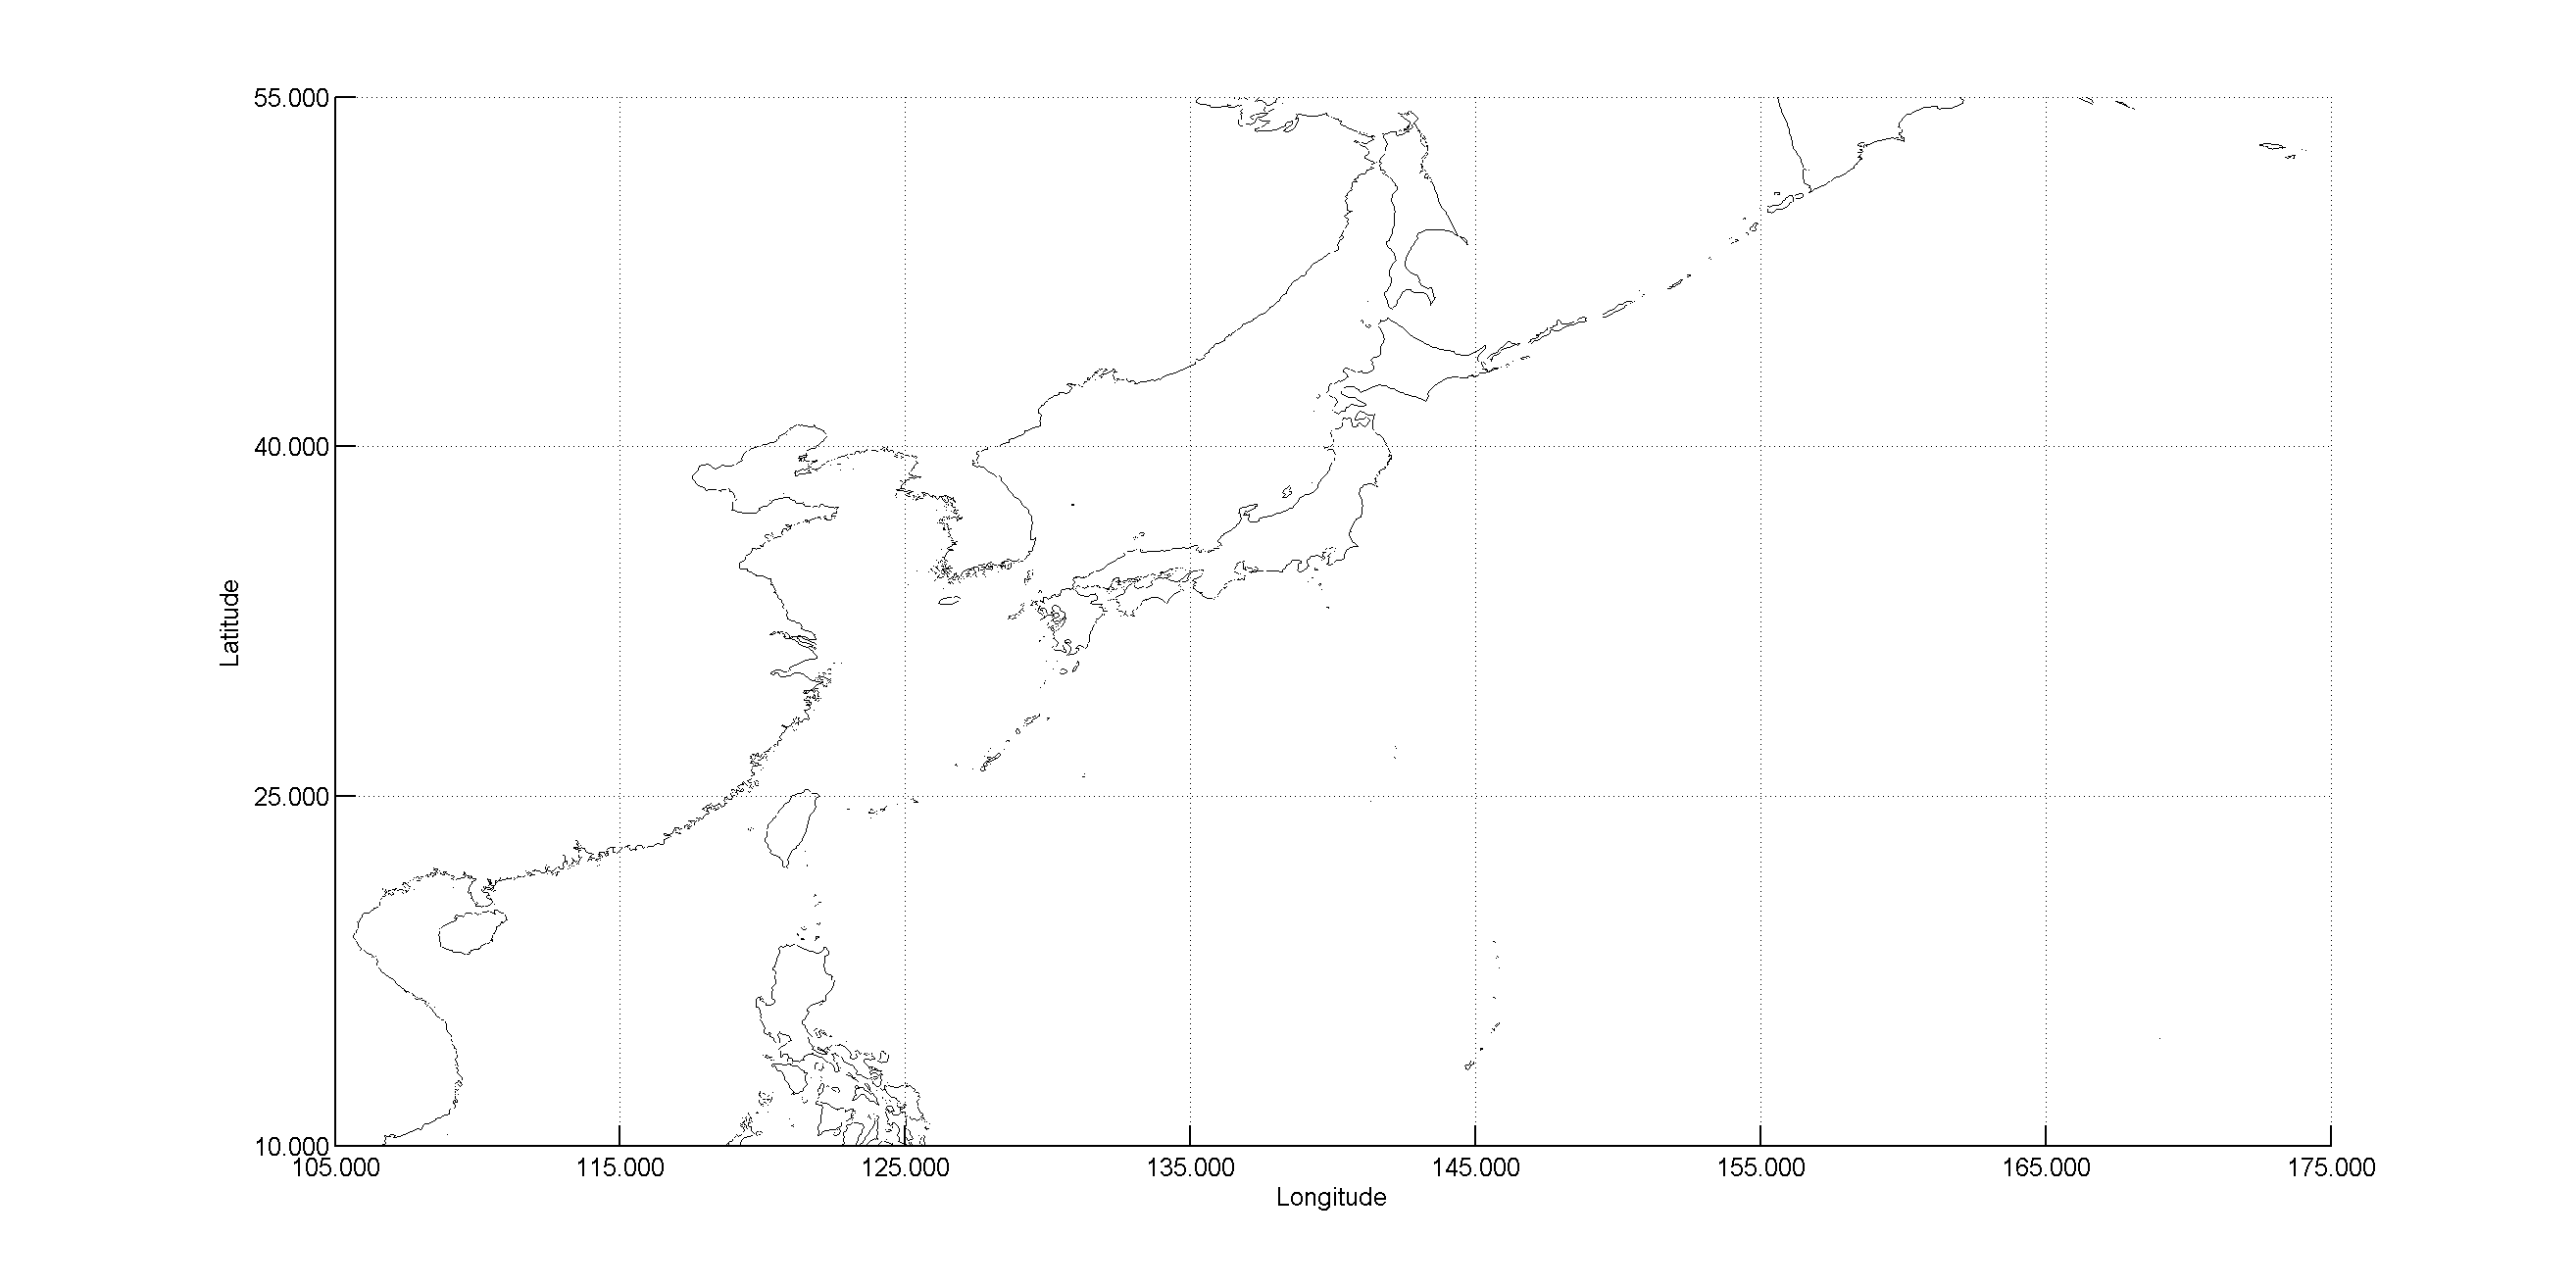 CYCLE_143 - Japan Descending passes